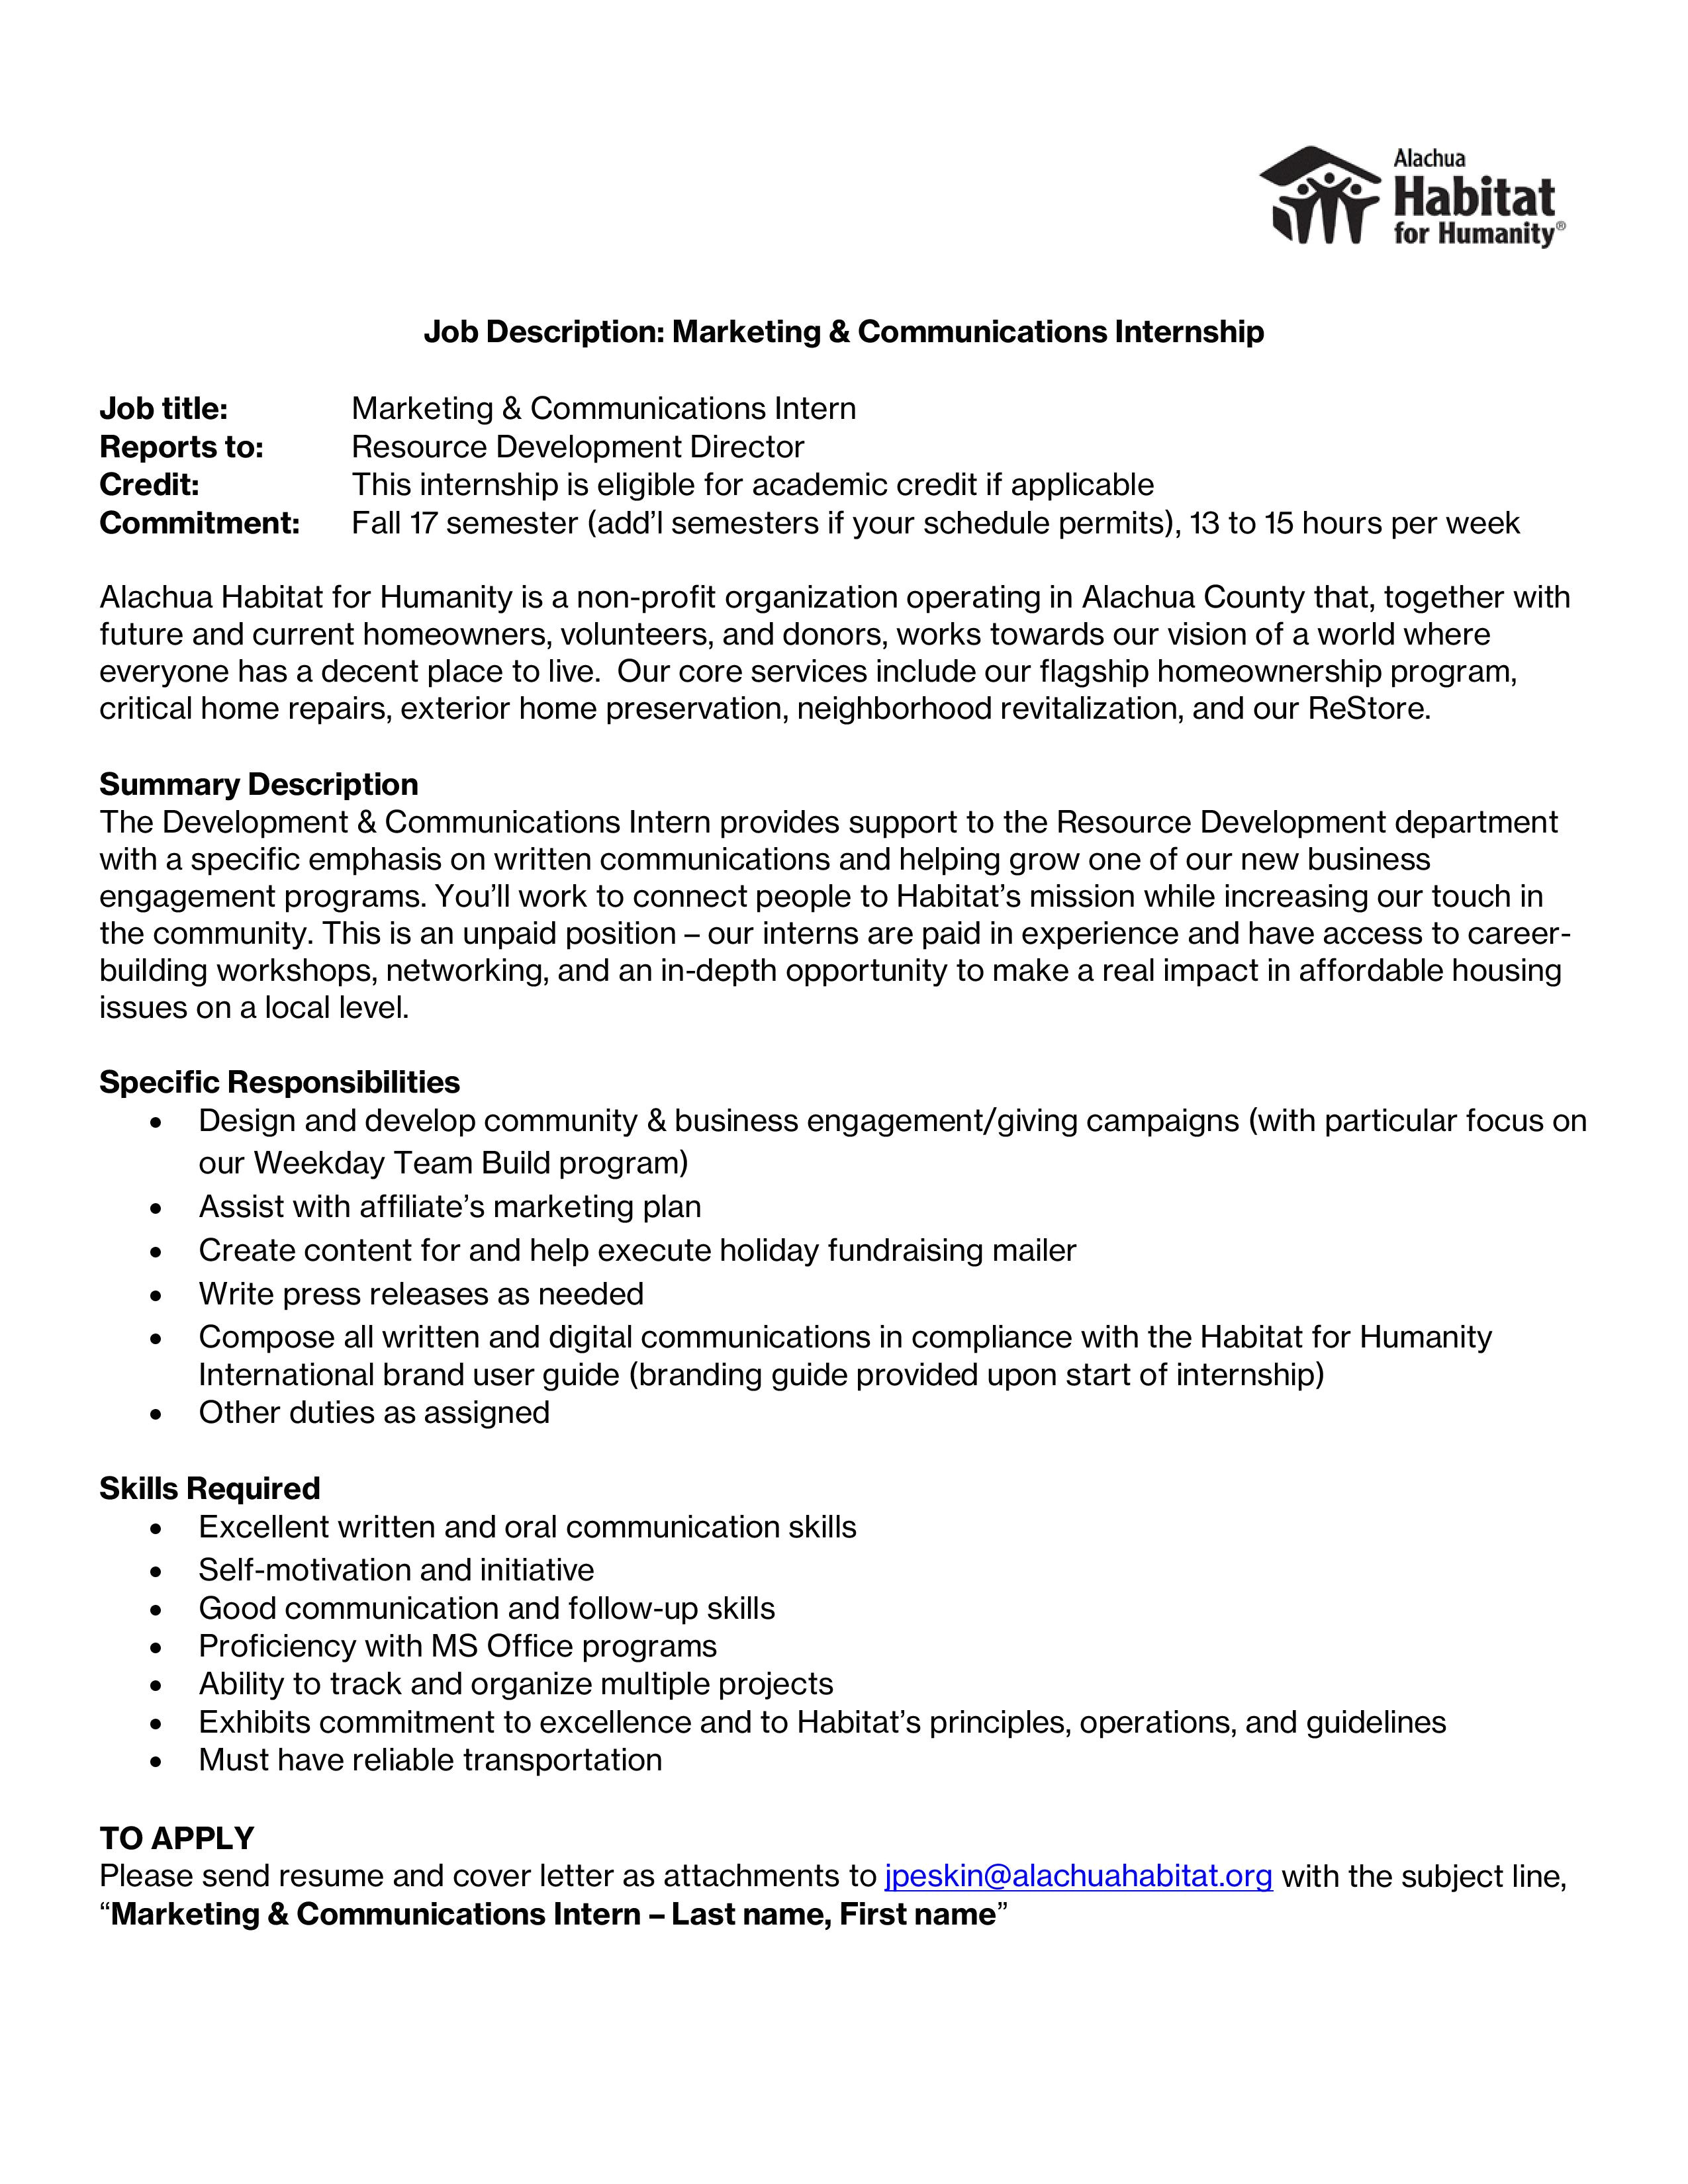 cover letter for internship communications